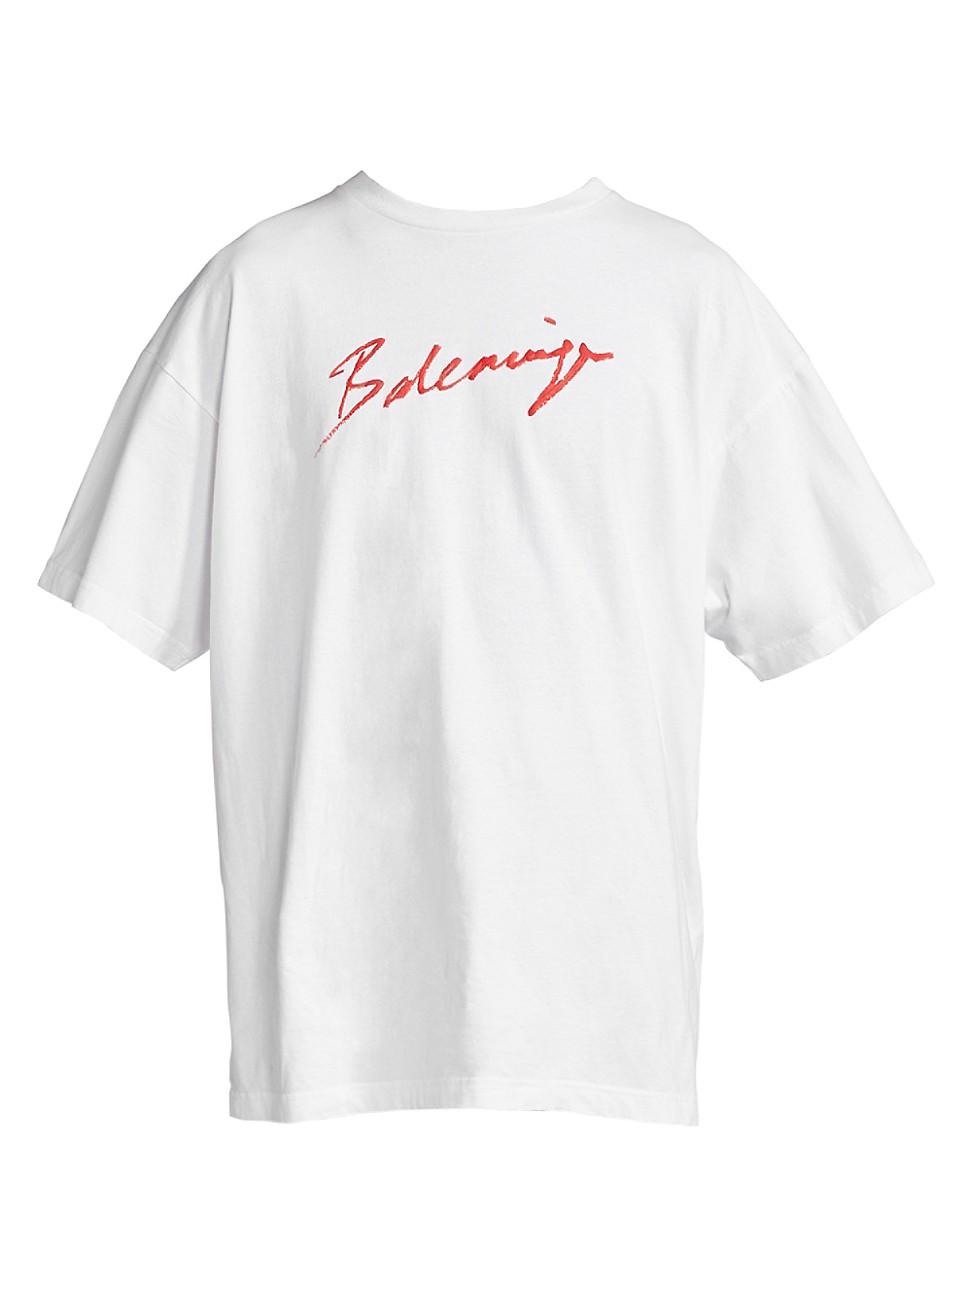 Balenciaga Cursive Graphic T-shirt in | Lyst